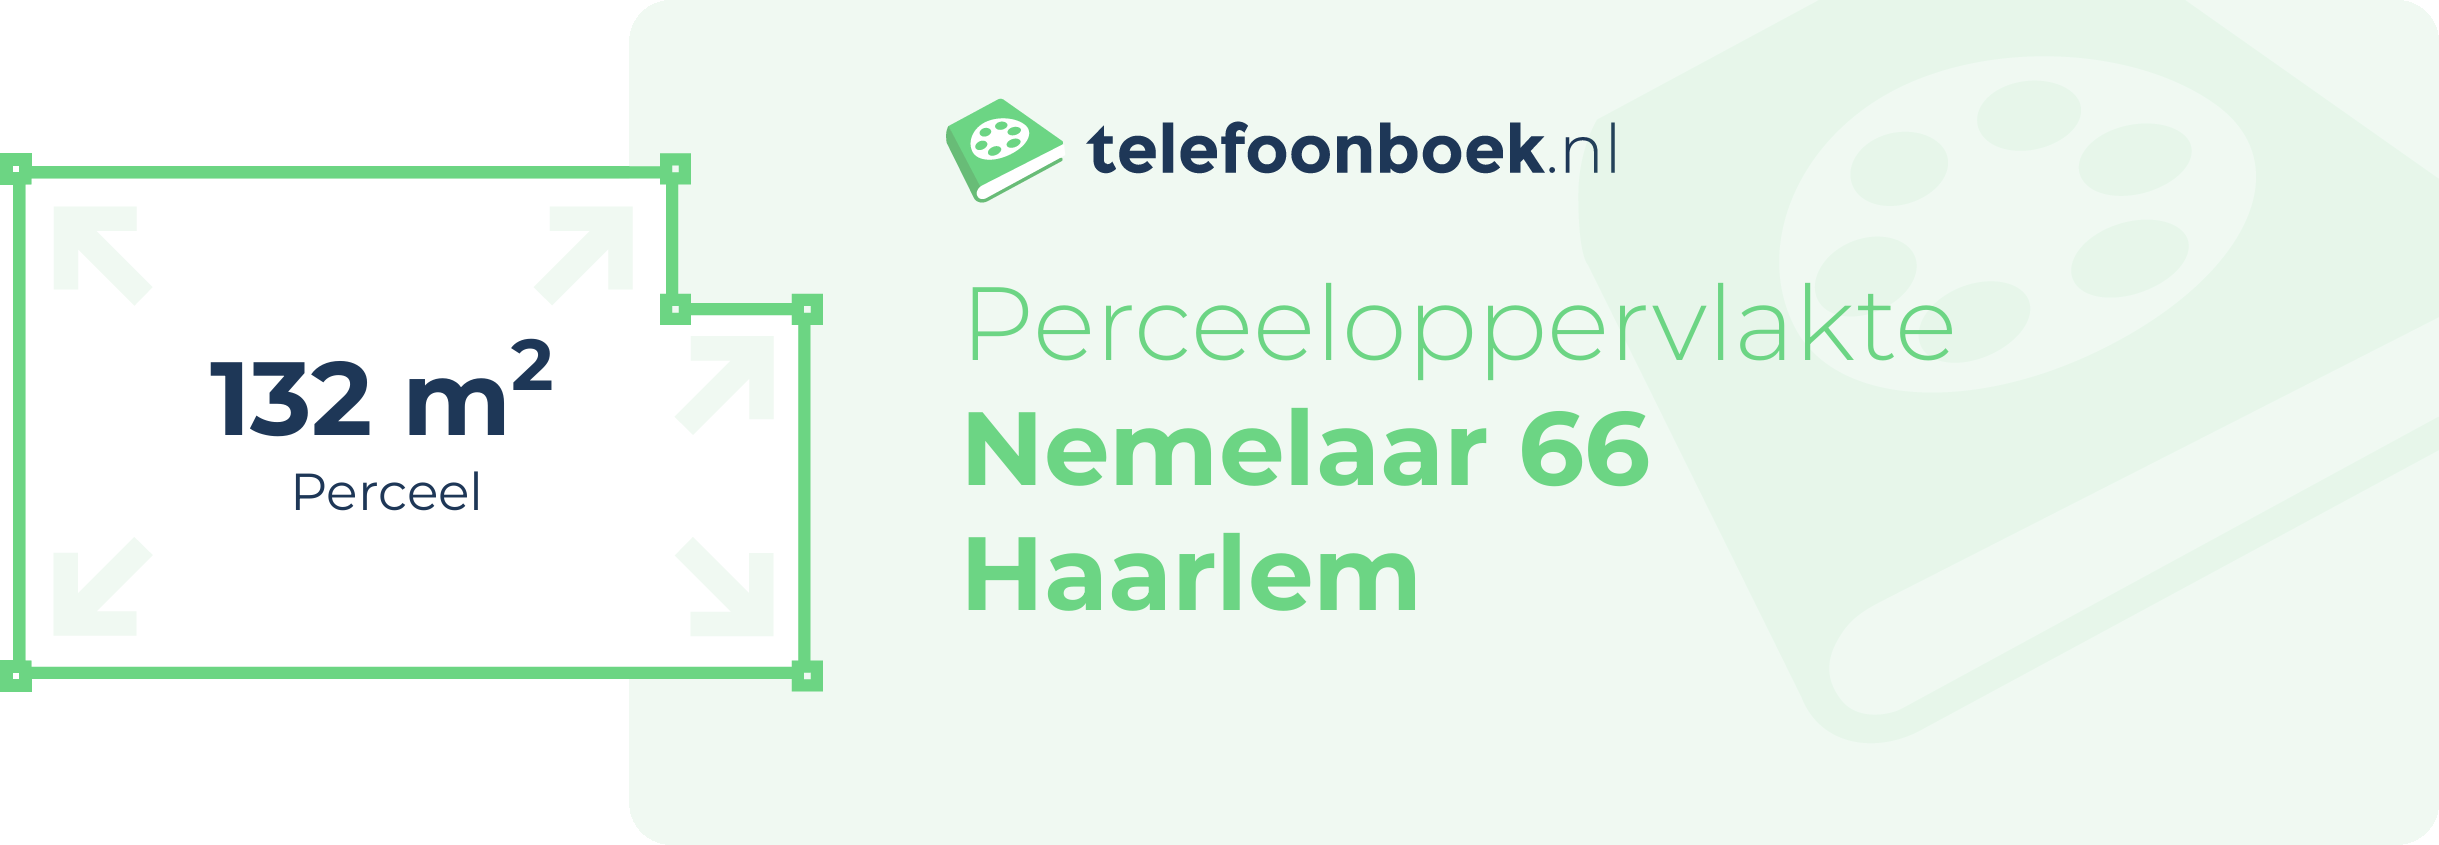 Perceeloppervlakte Nemelaar 66 Haarlem